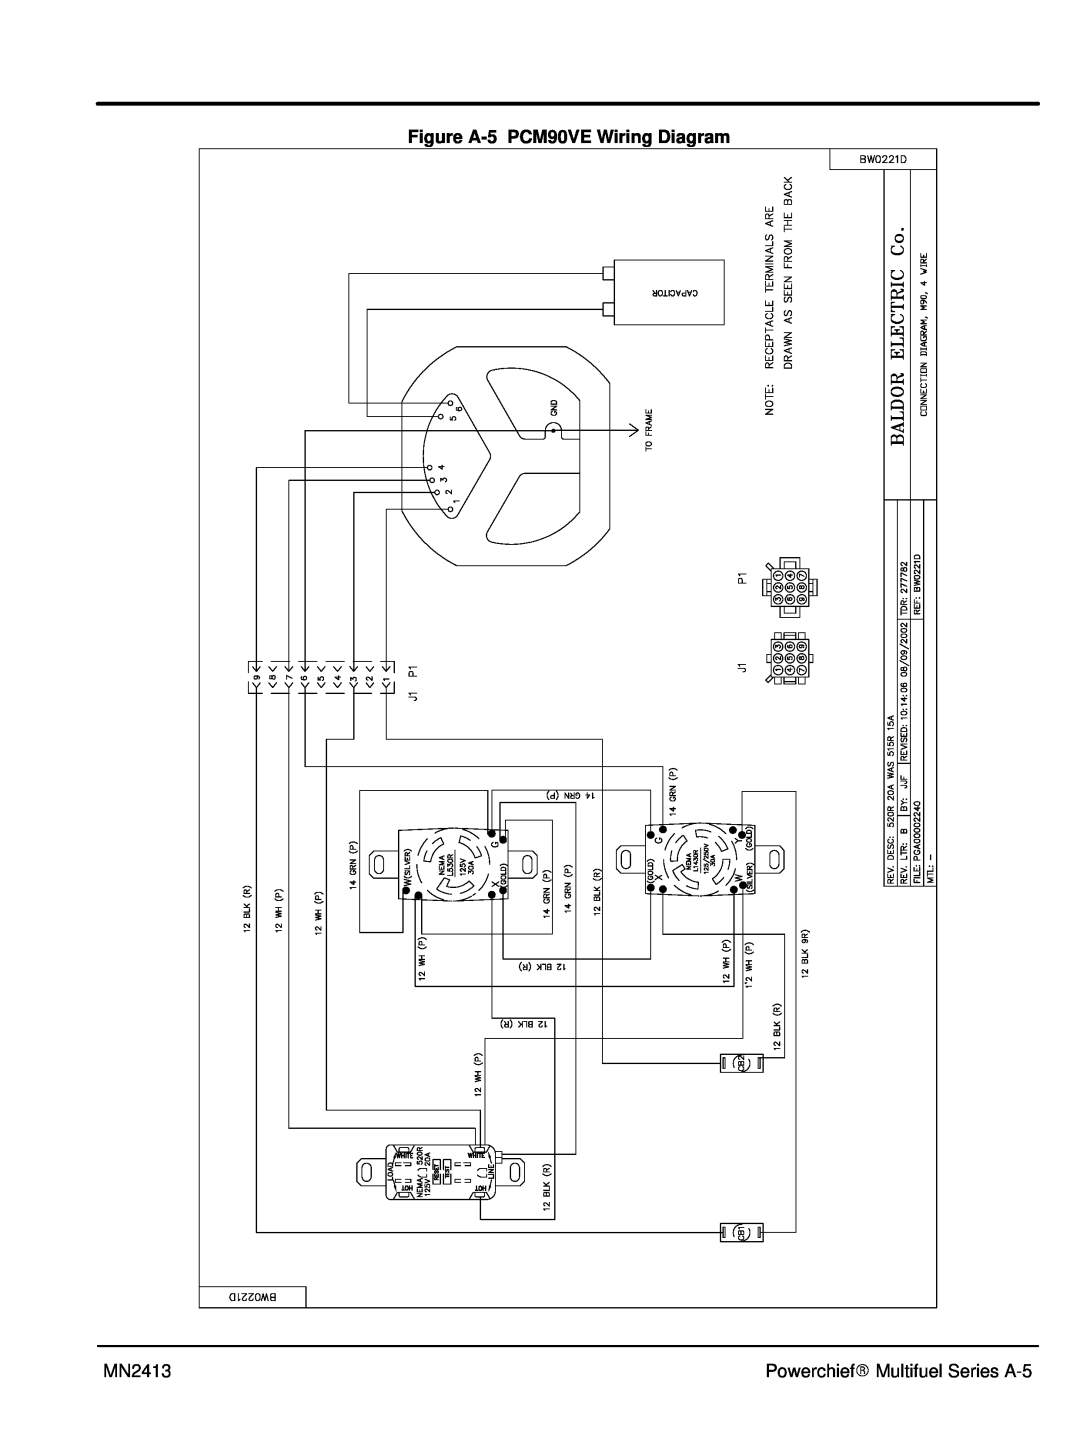 Baldor Series PC Mutlifuel manual Figure A-5 PCM90VE Wiring Diagram, MN2413, PowerchiefR Multifuel Series A-5 